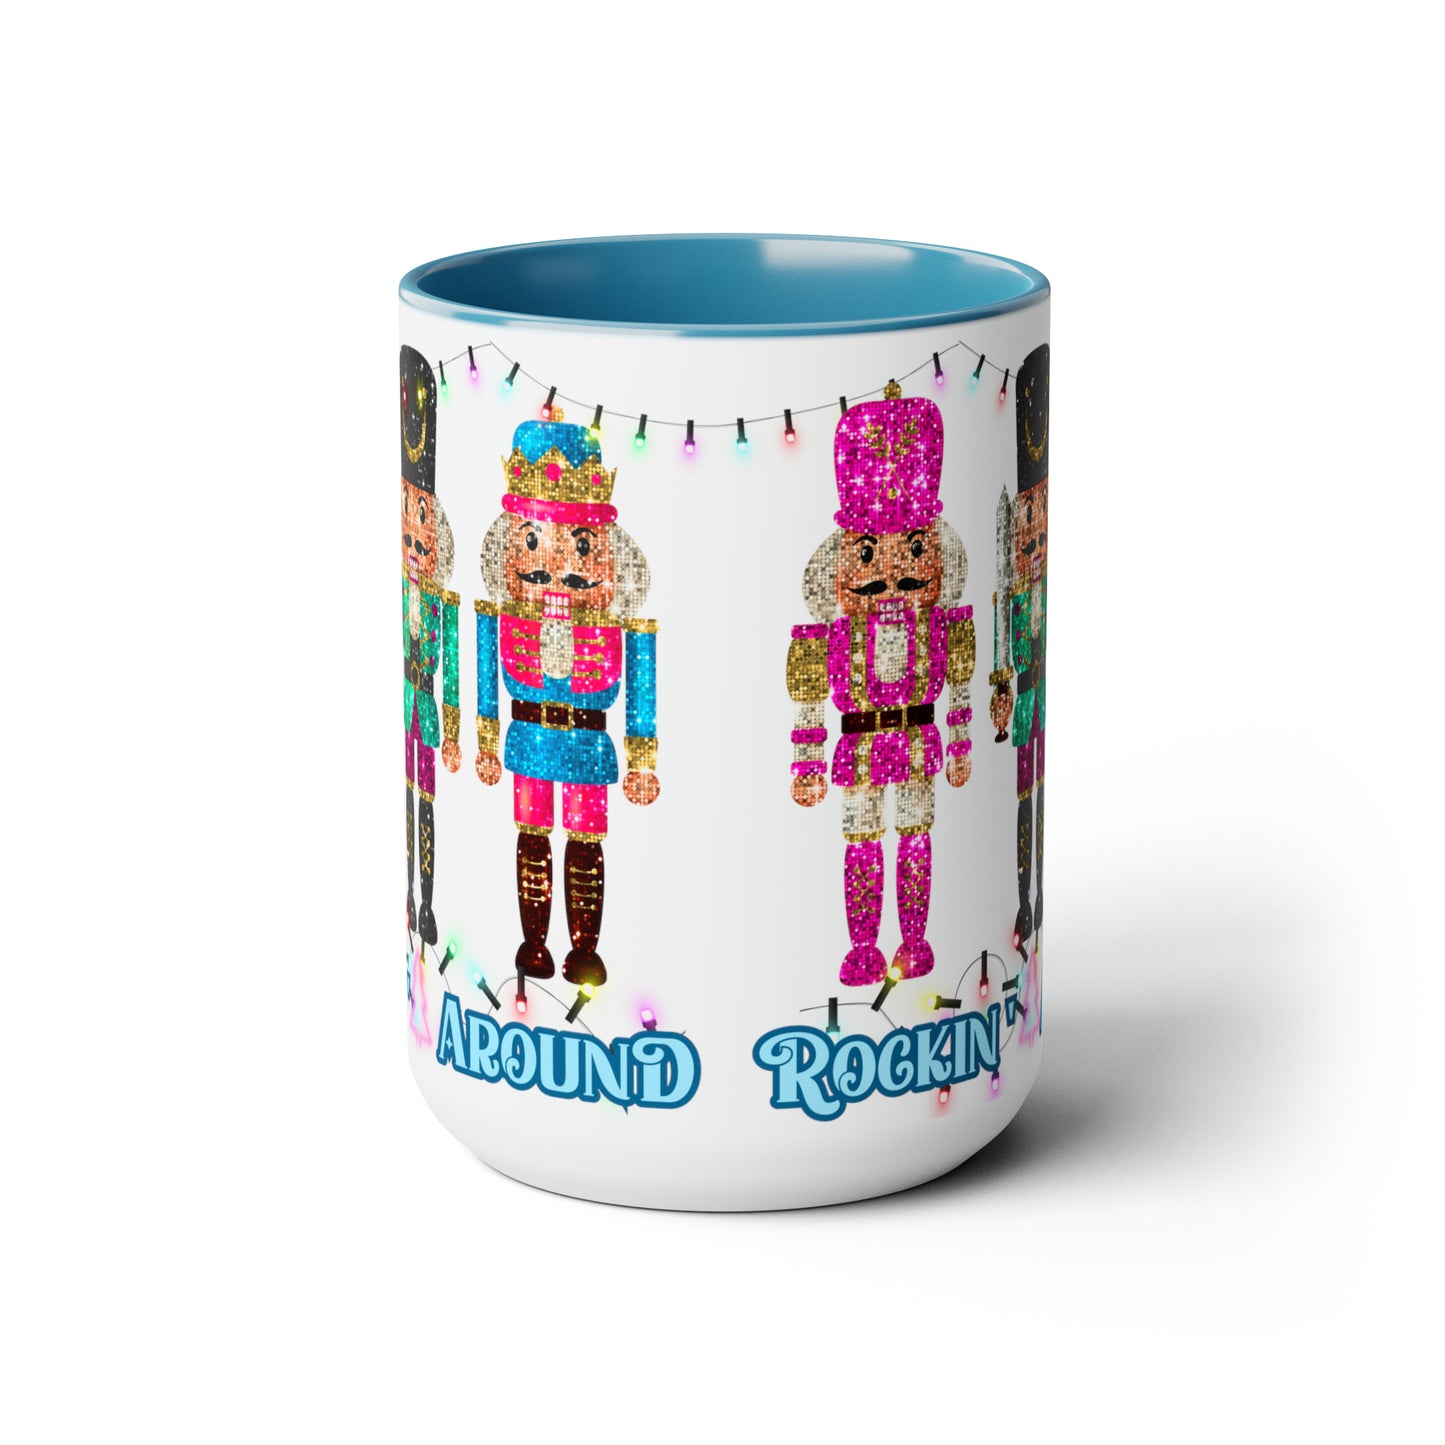 Rockin' Around - Coffee Mug